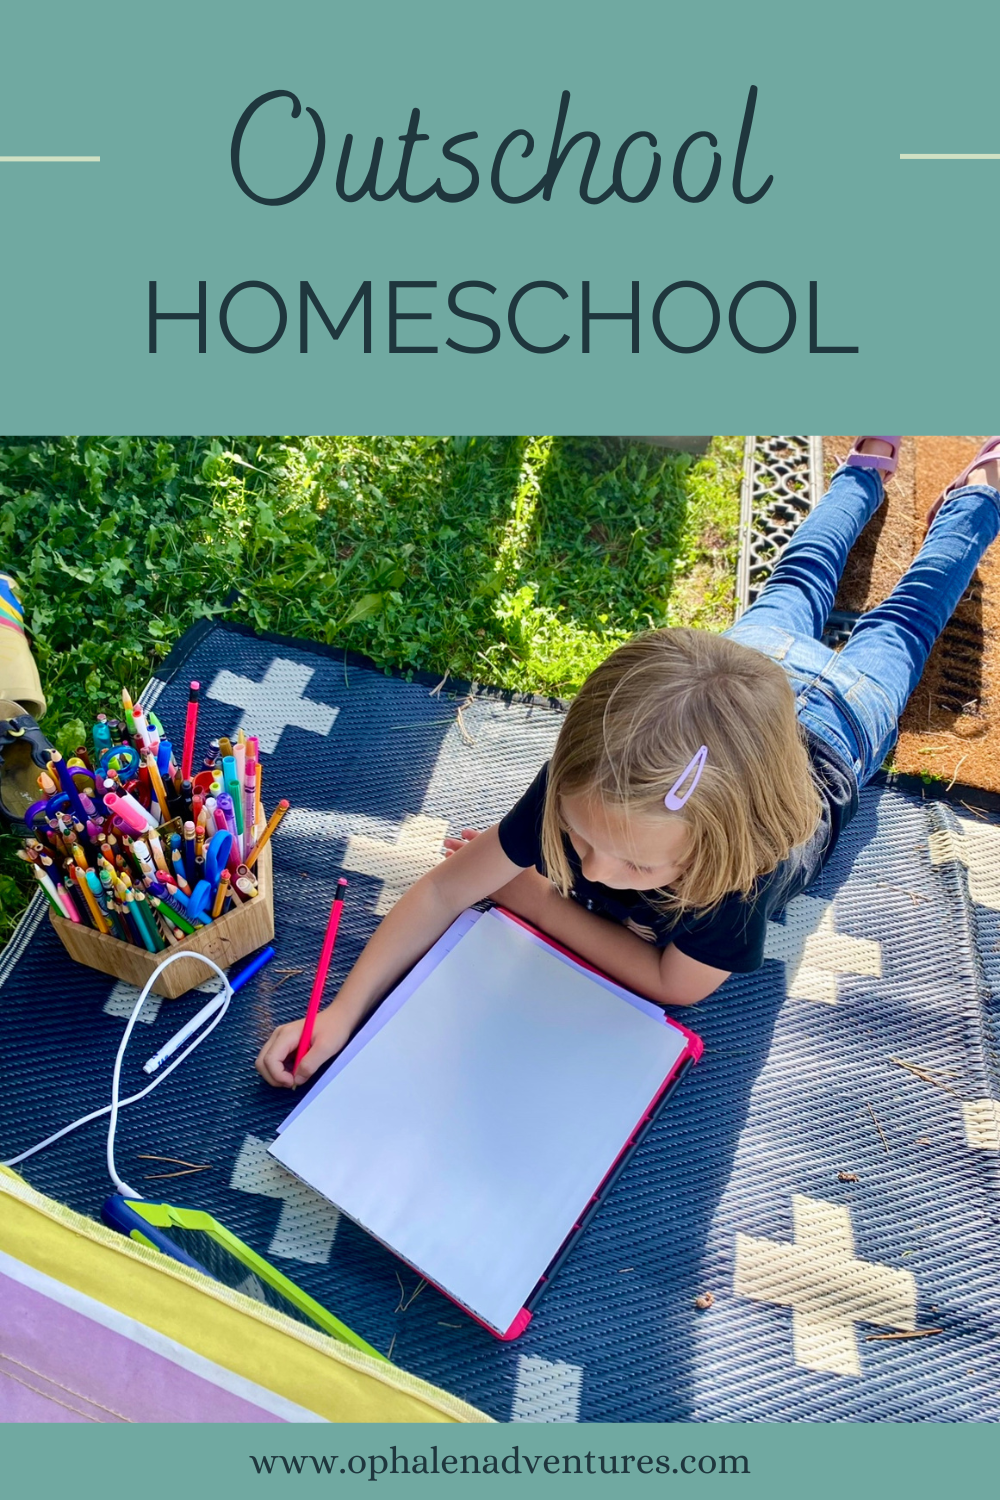 Outschool Homeschool: A Cheap Way to Hack Your Homeschooling!